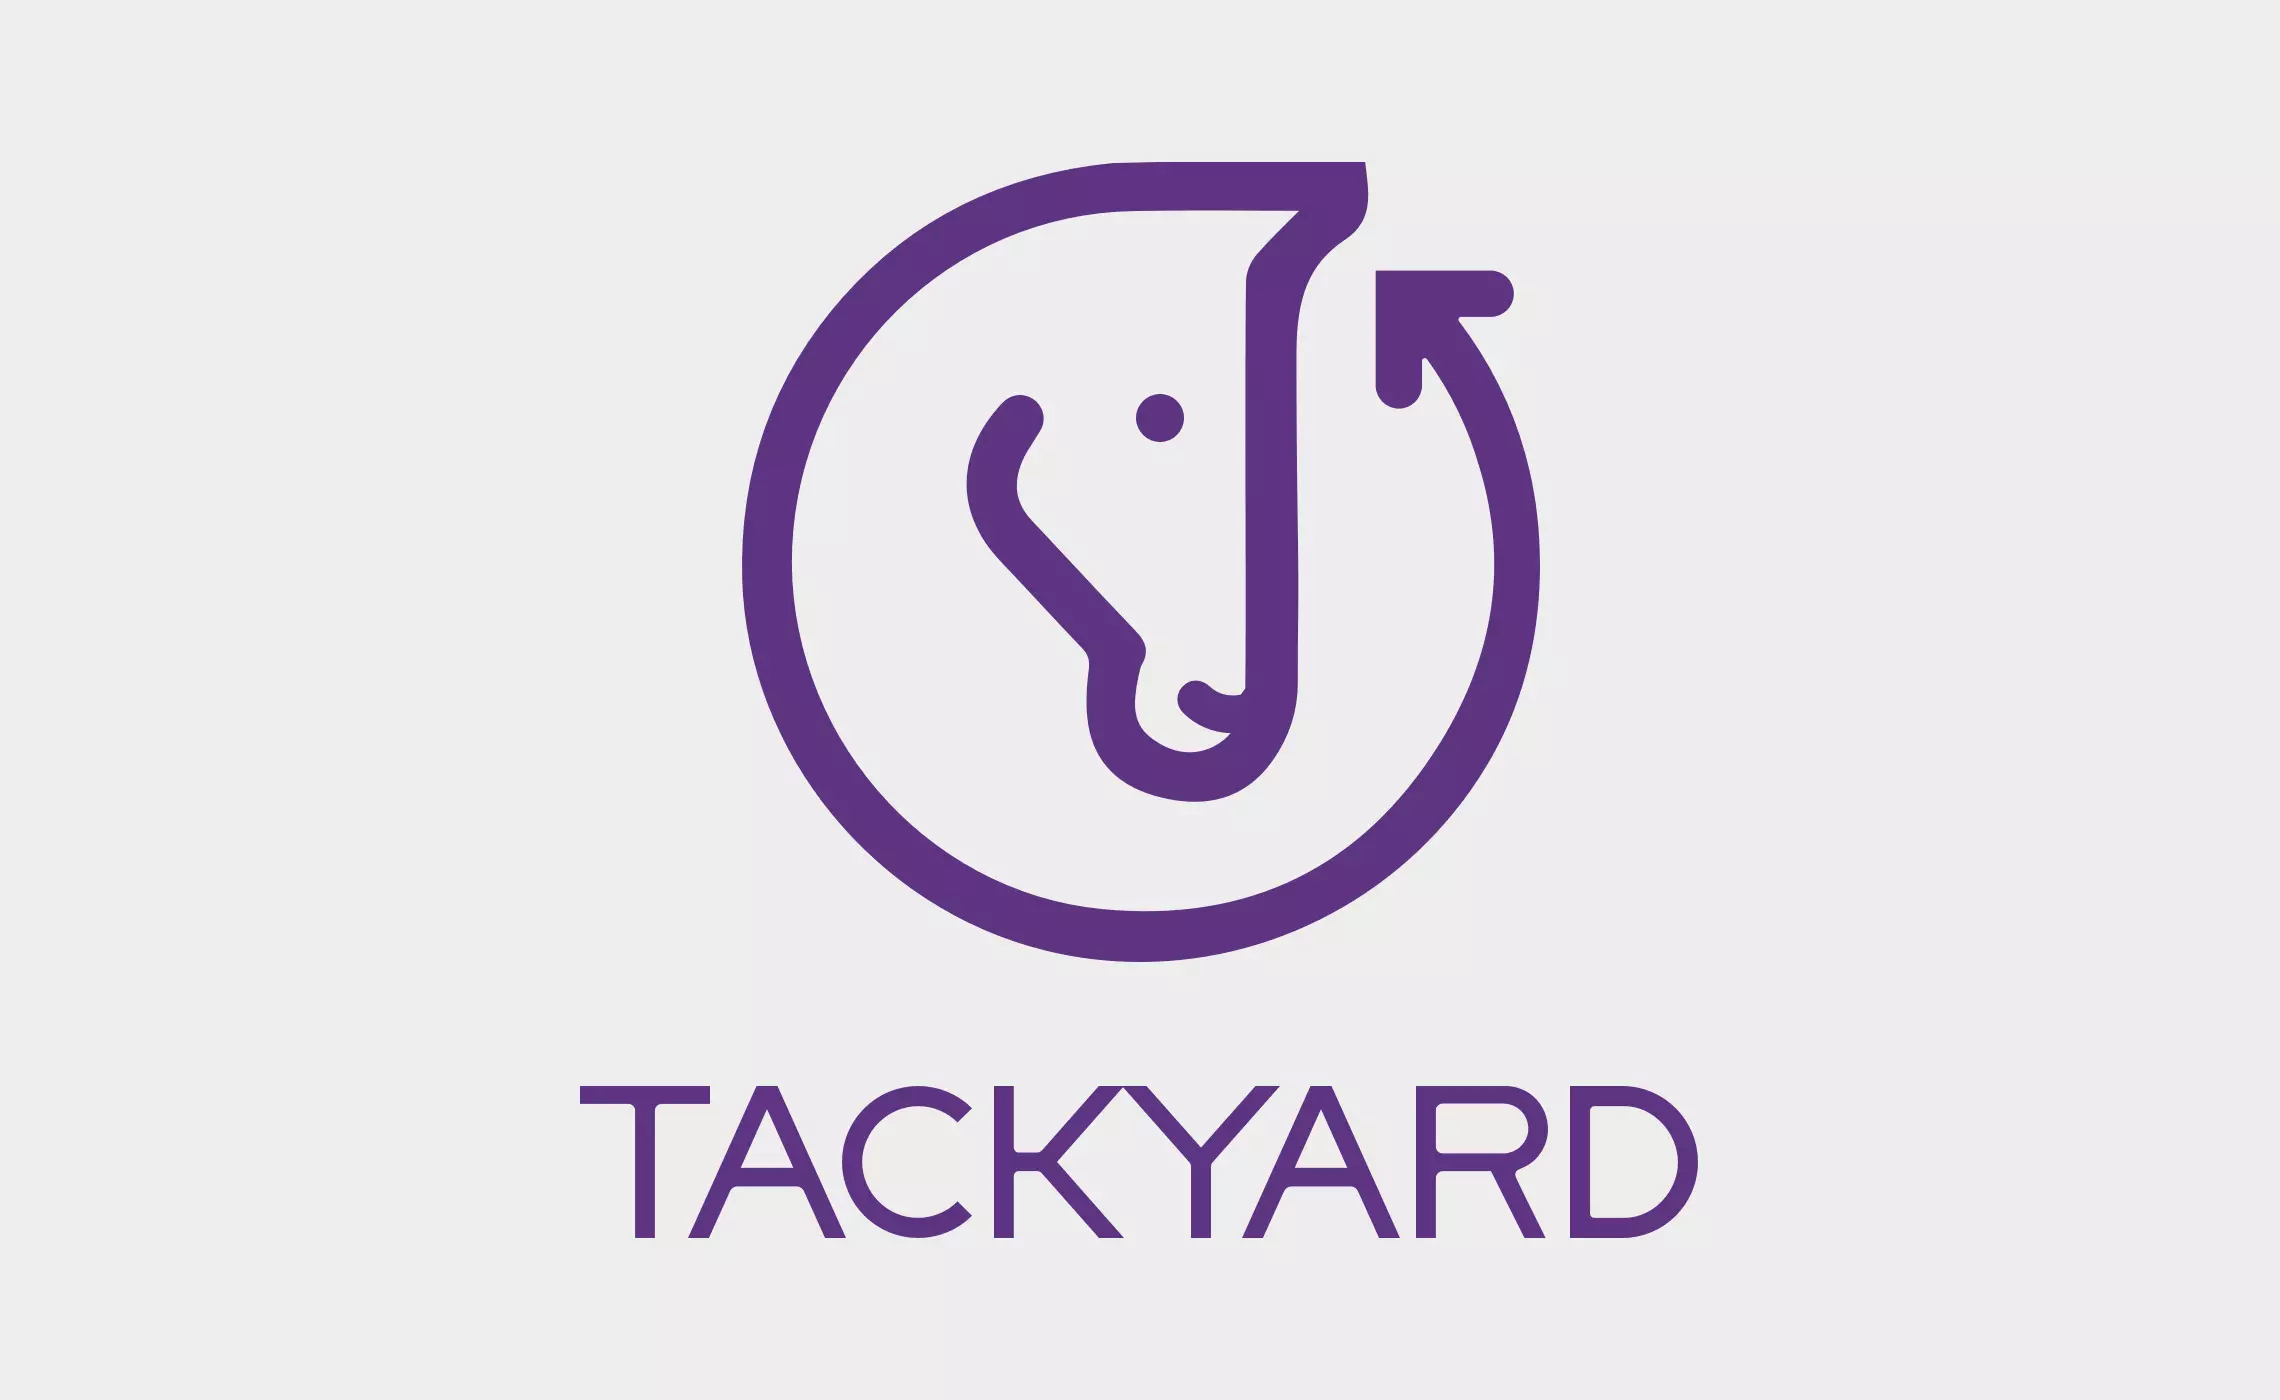 Tackyard – branding